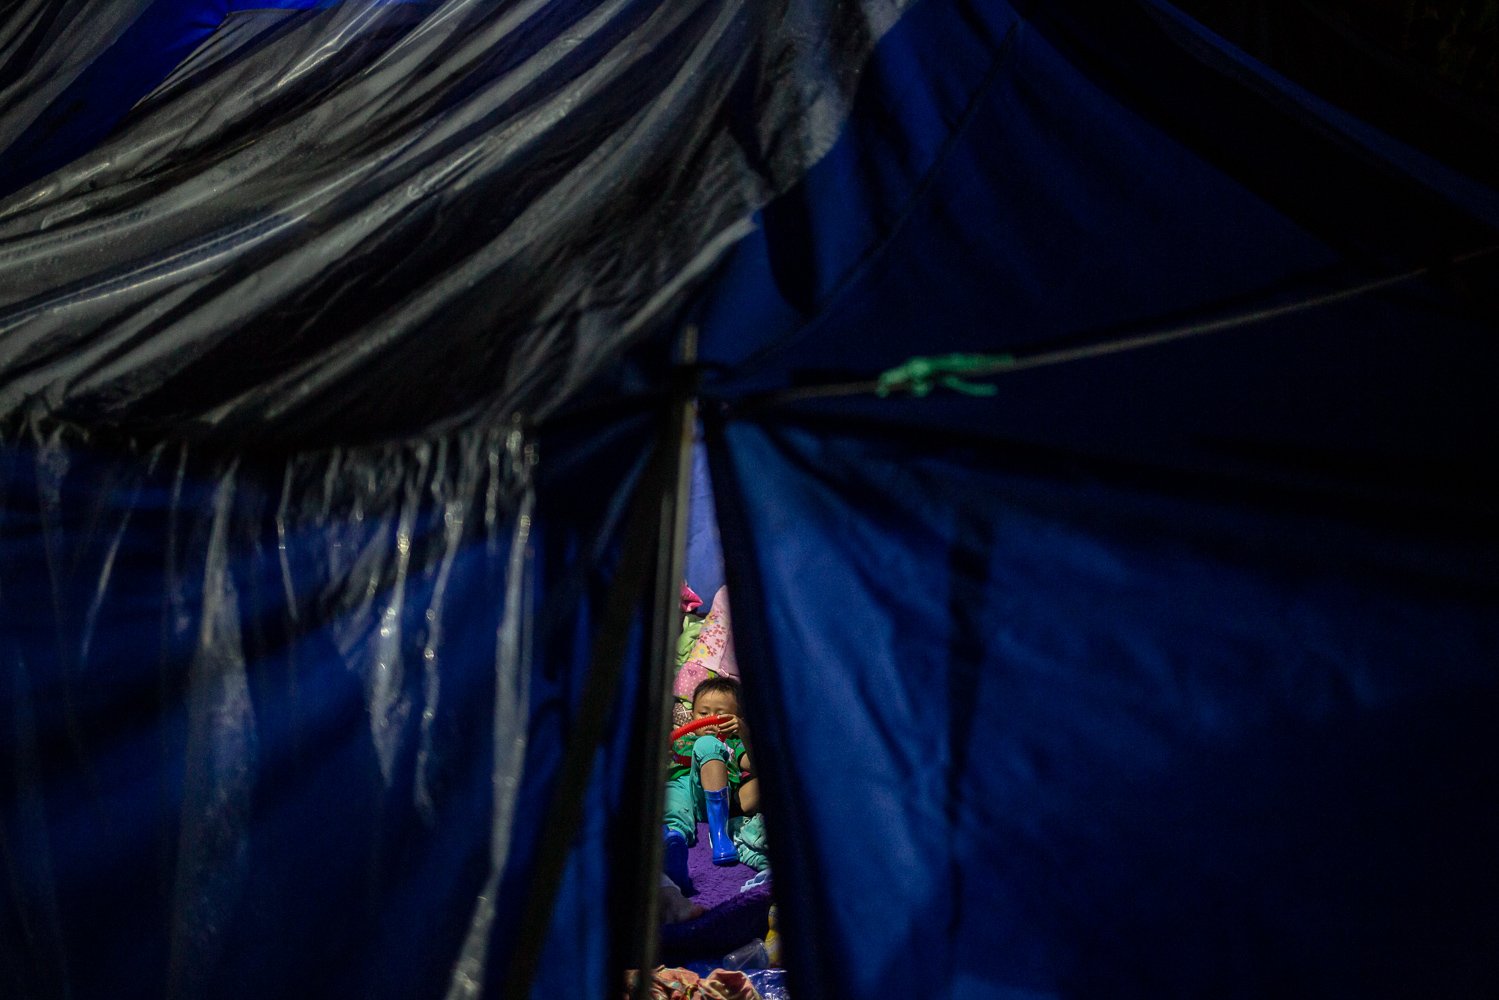 Seorang anak terlihat bermain di dalam tenda pengungsian pasca gempa bumi dengan magnitude 5.6 di Desa Mangunkerta, Cugenang, Cianjur, Jawa Barat, Minggu (27/11). Badan Nasional Penanggulangan Bencana (BNPB) mencatat total 321 orang meninggal dunia, jumlah pengungsi hingga hari ini mencapai 73.874 orang akibat gempa di Cianjur.